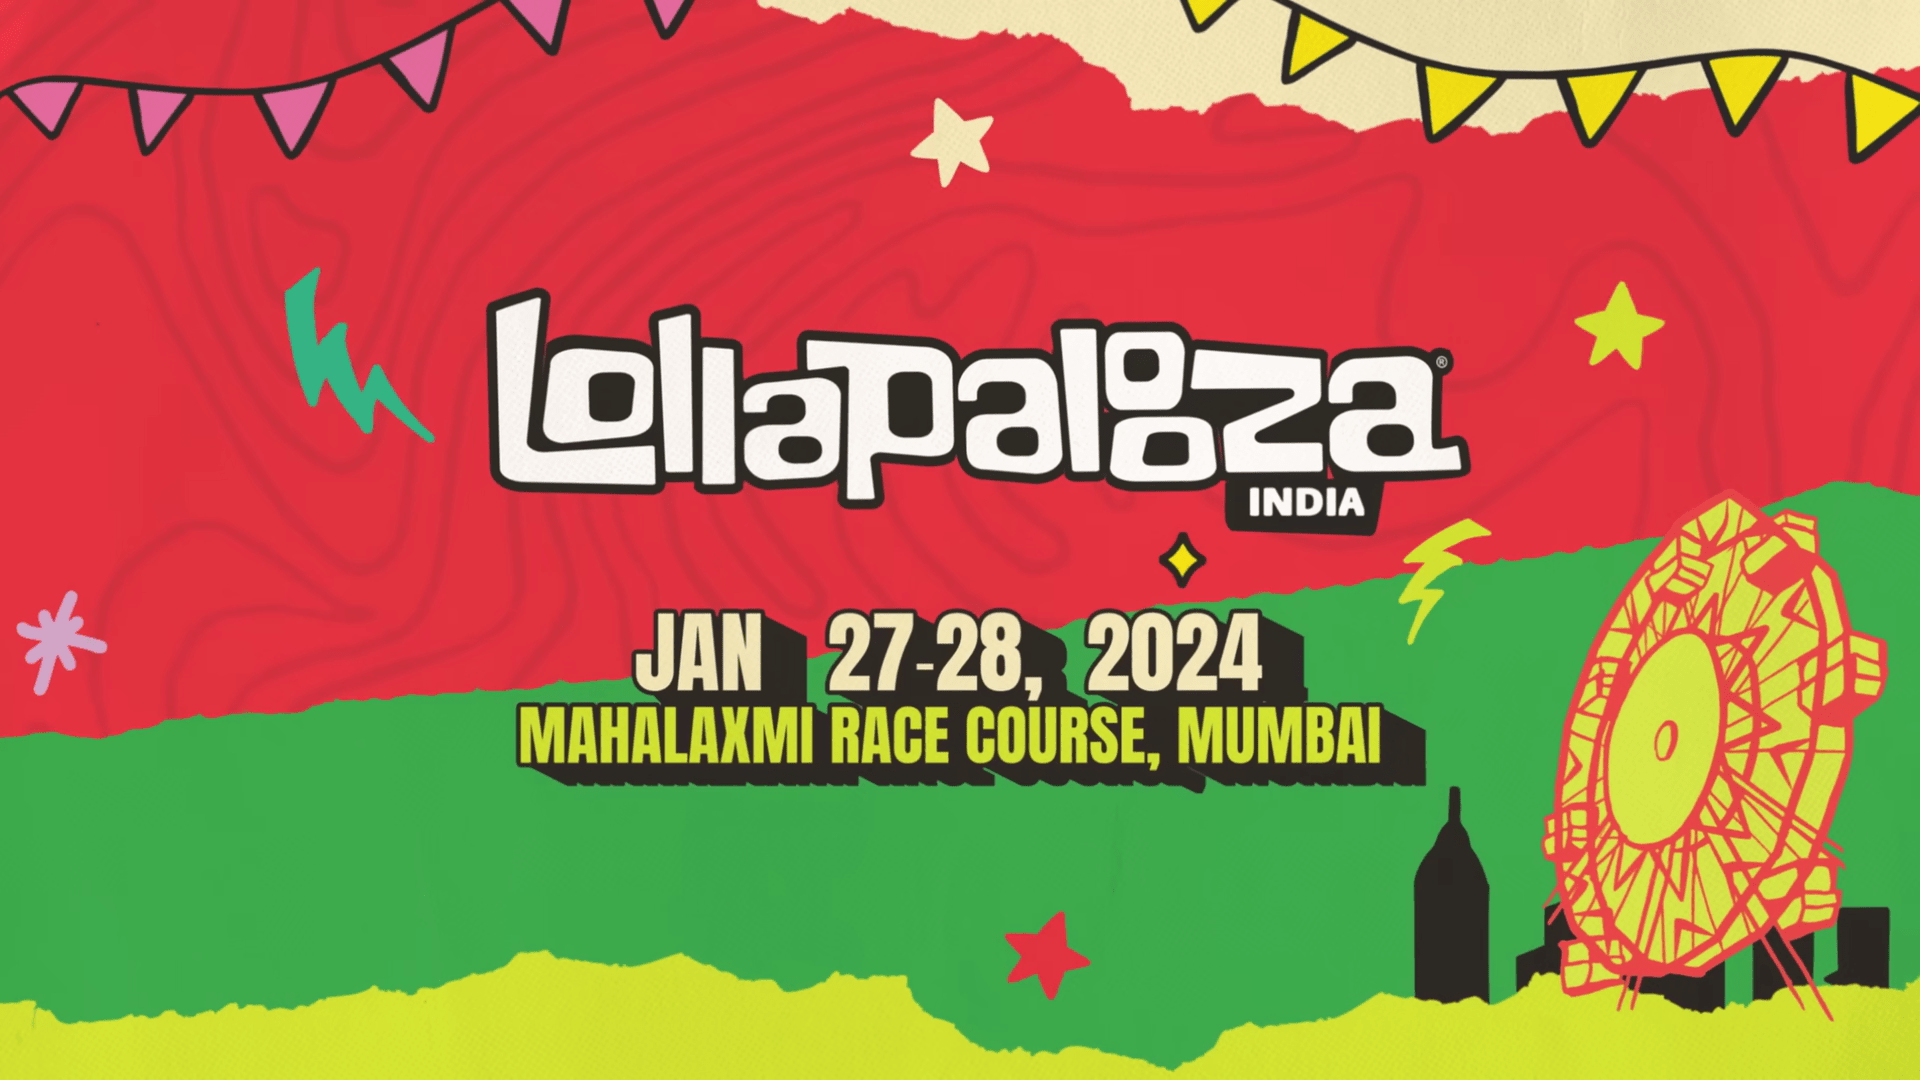 Lollapalooza India 2024 Lineup Sting, Jonas Brothers, Halsey and many